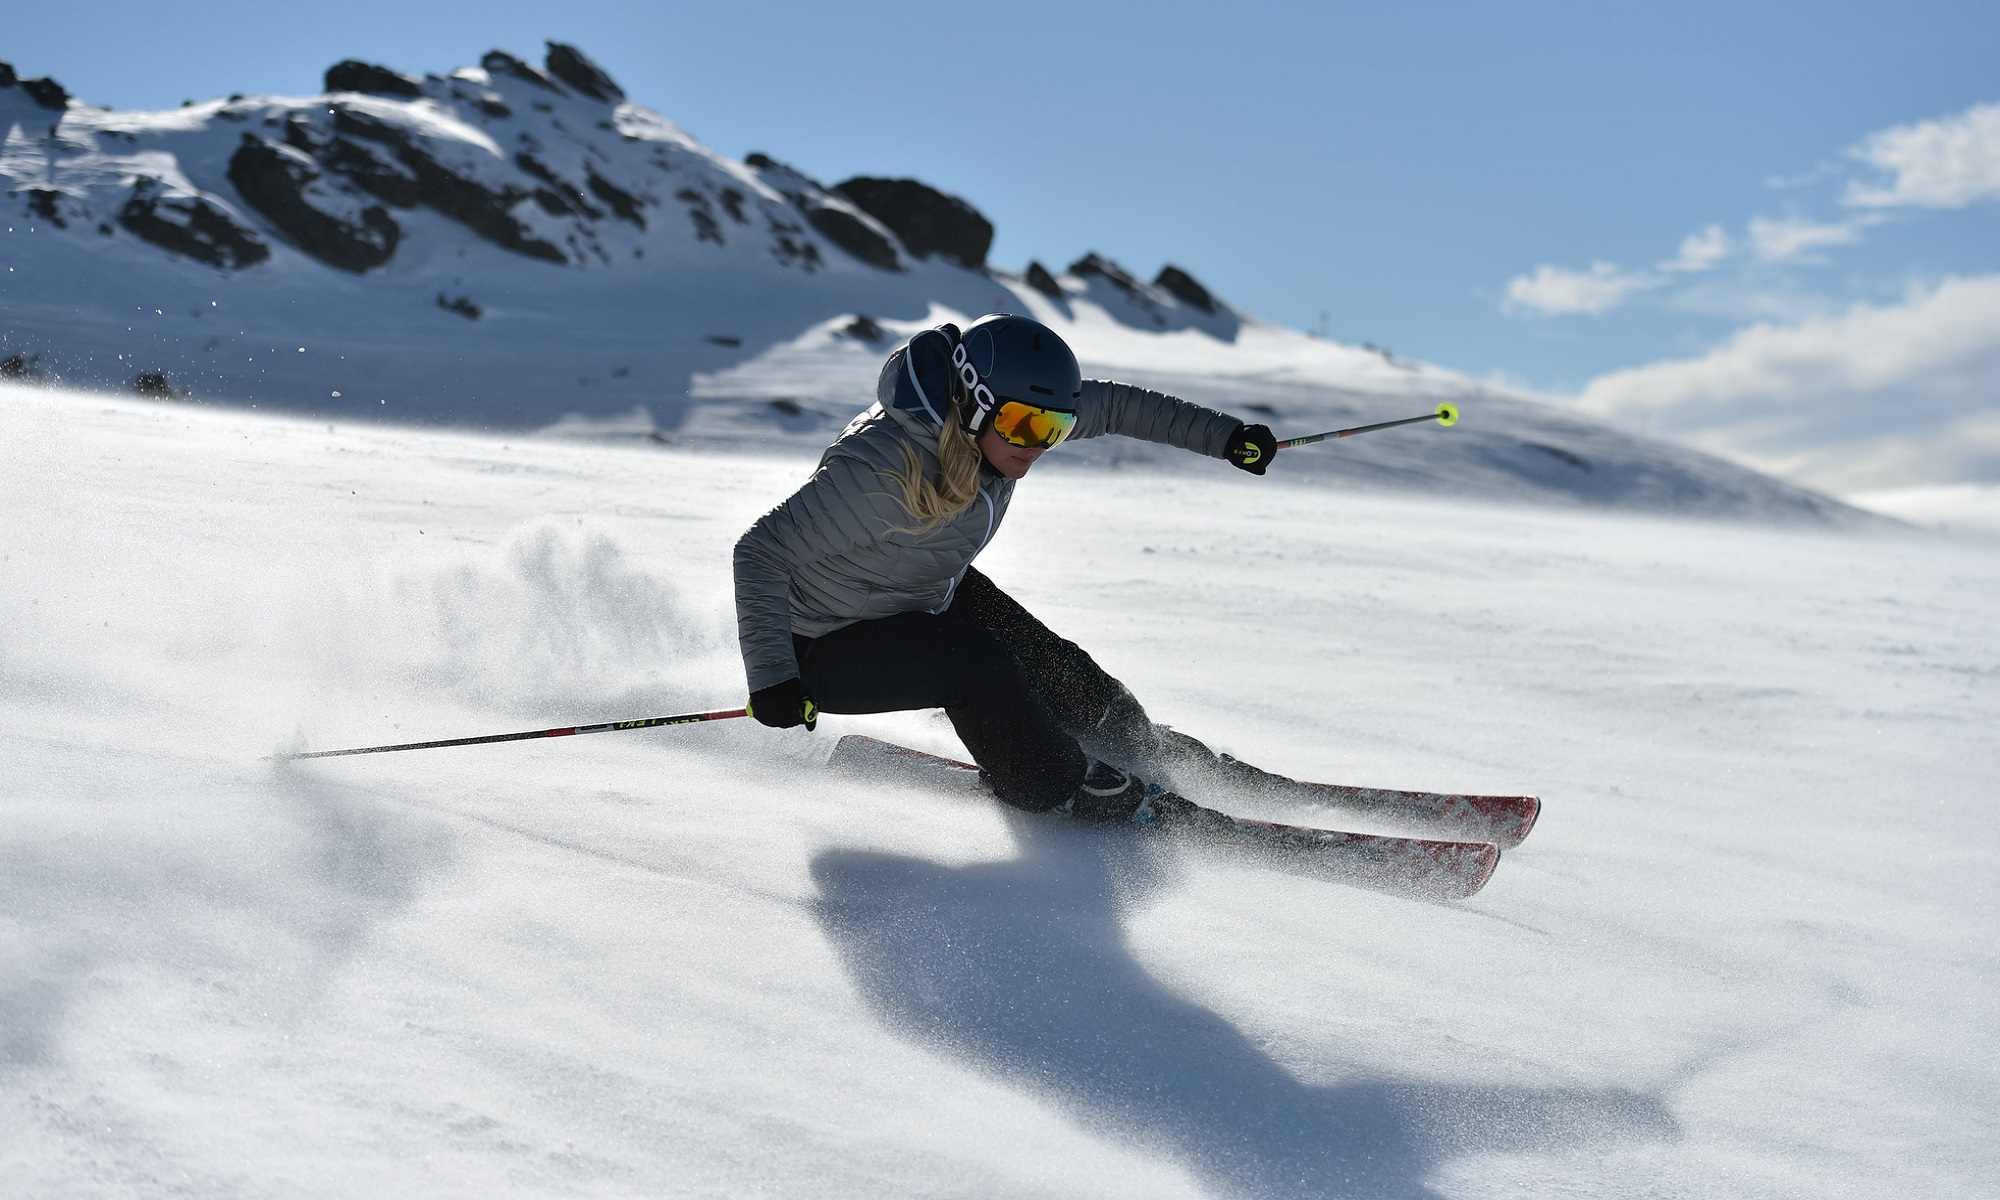 Chemmy Alcott, ski~mojo's ambassador skiing with the support of ski~mojo. Photo: ski~mojo. Old knees do not need to mean no more skiing!